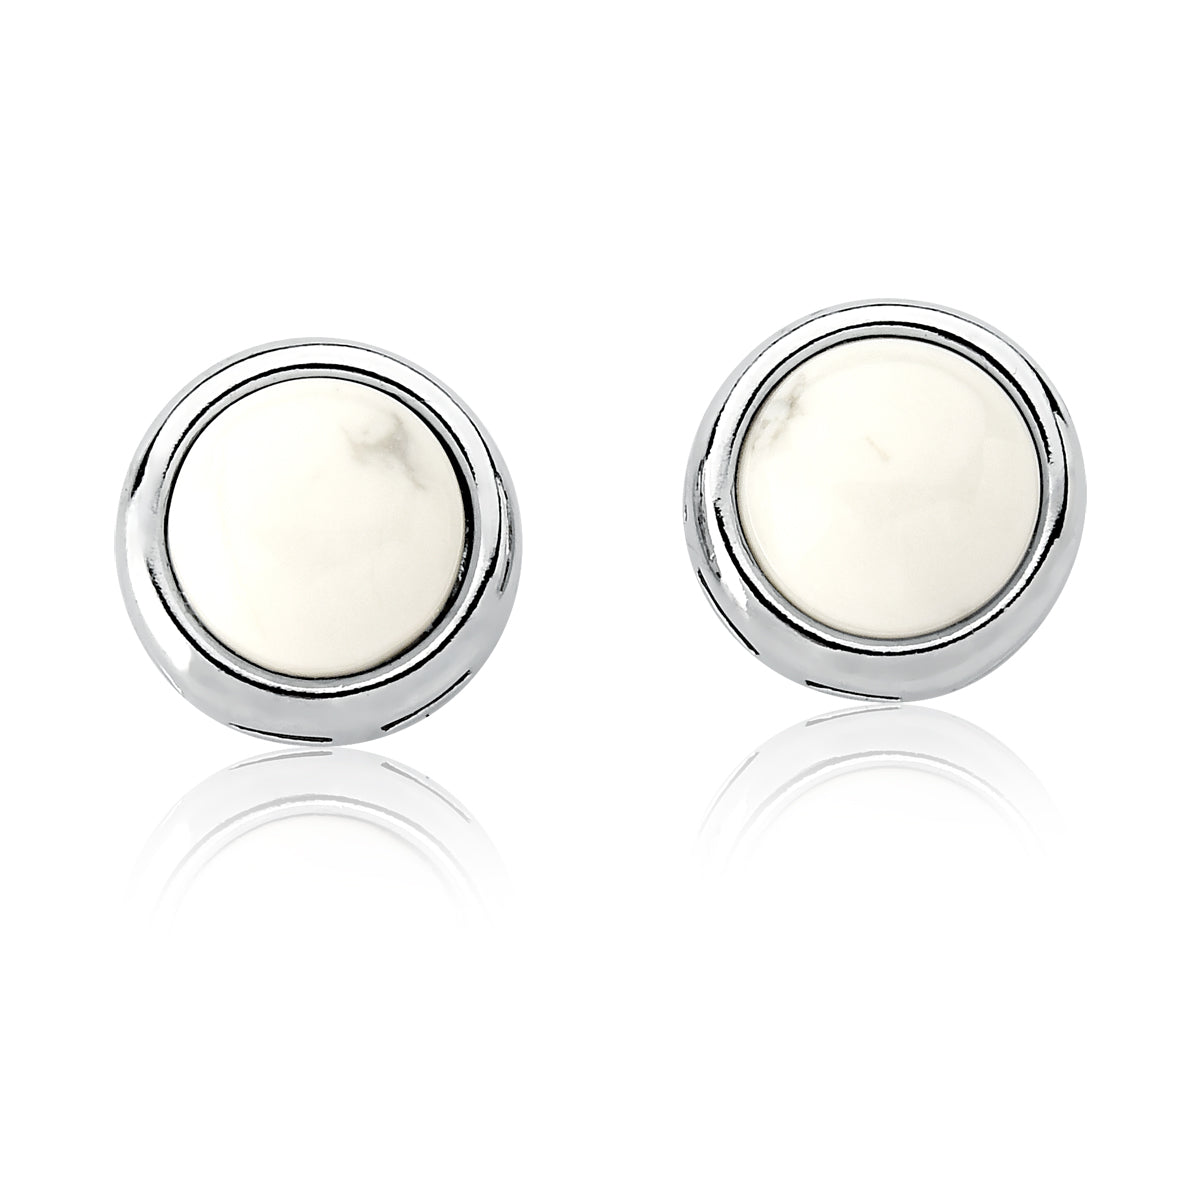 Stud Earrings in White Howlite Natural Gemstone | Rhodium Plated